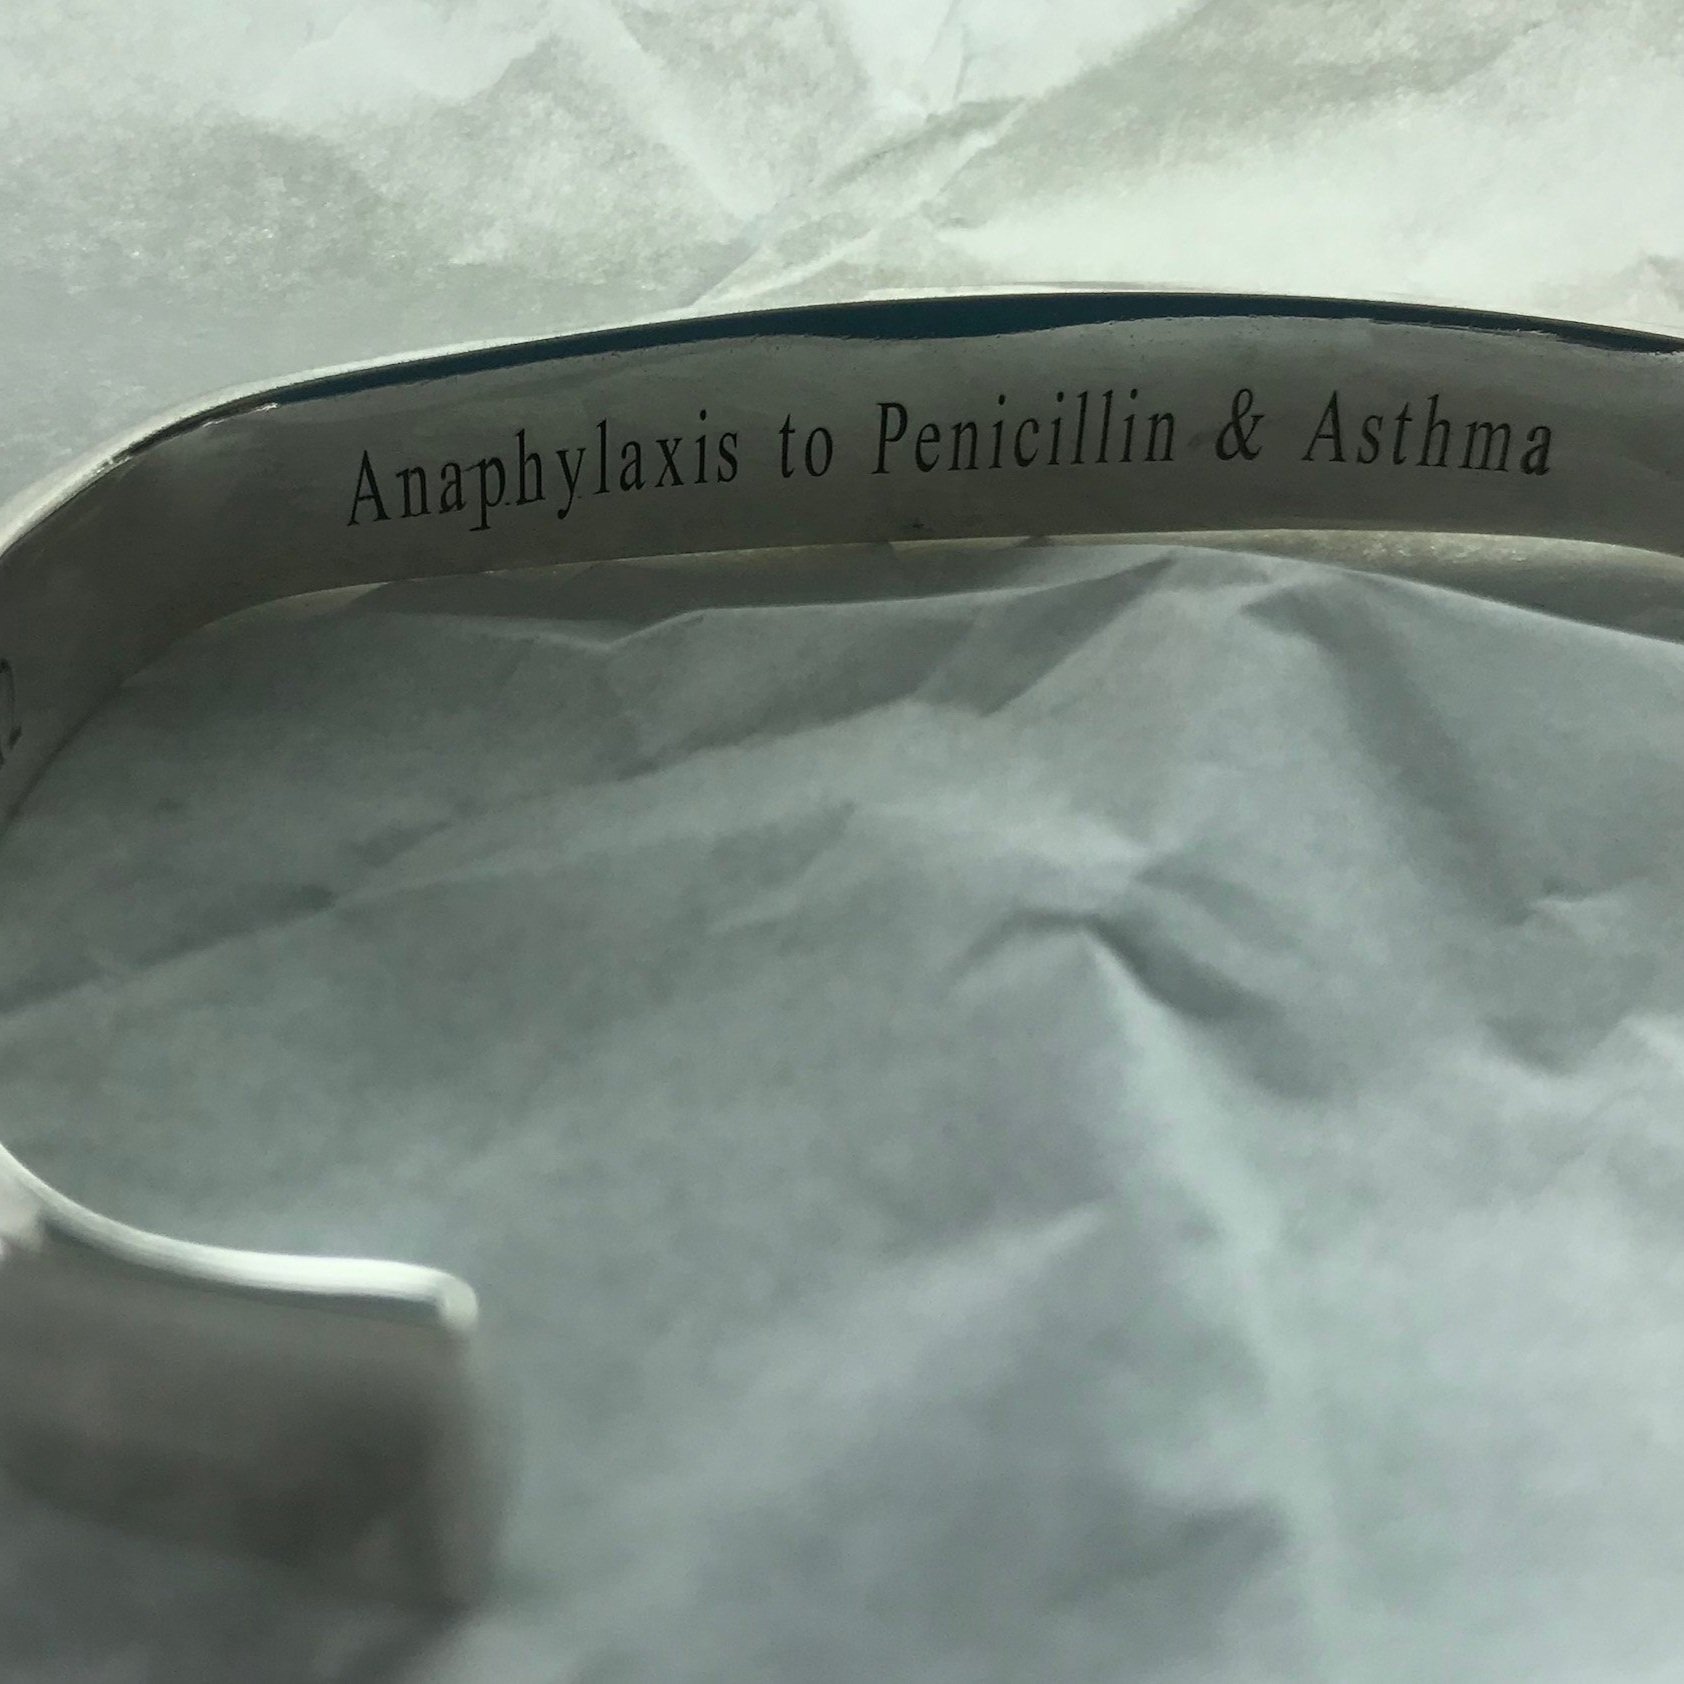 AllerMates POLLEN Allergy Wristband Medical Alert ID Silicone Sinus Bracelet  NEW | eBay